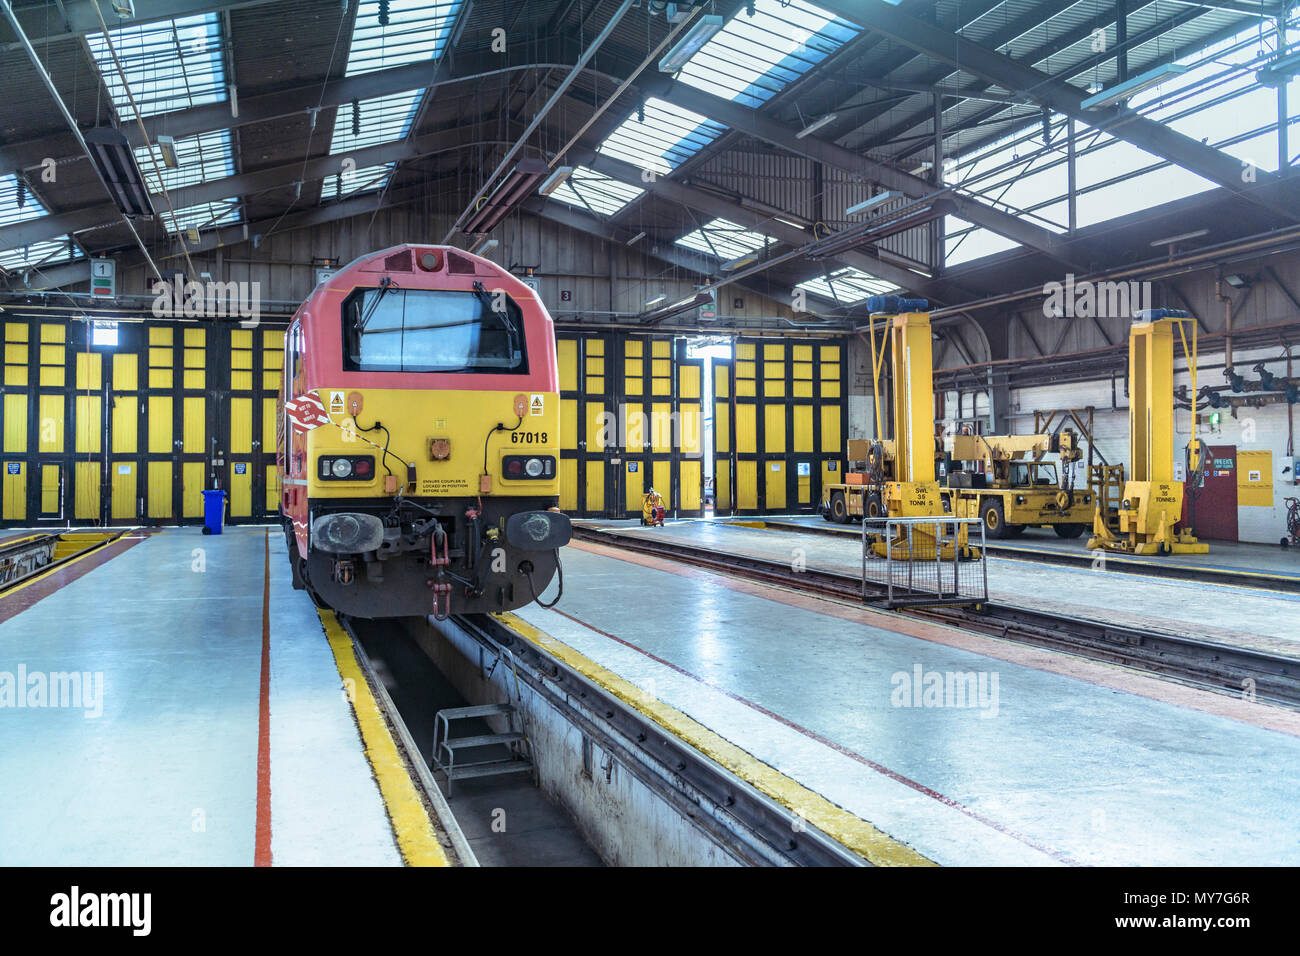 Locomotive being refurbished in train engineering factory Stock Photo